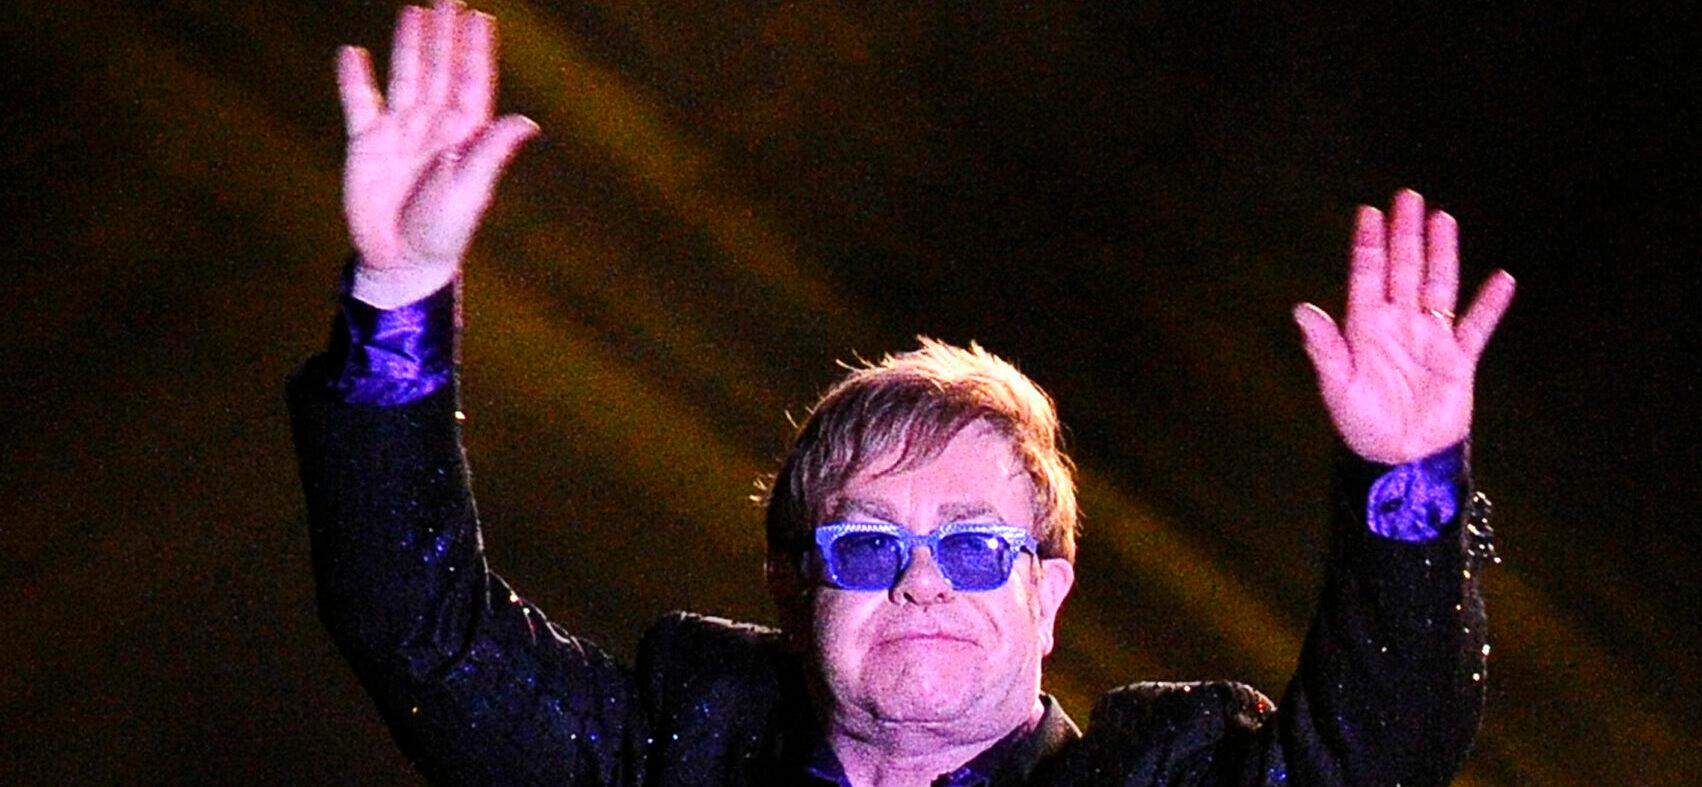 Elton John performing in Porto Cervo Sardinia Italy